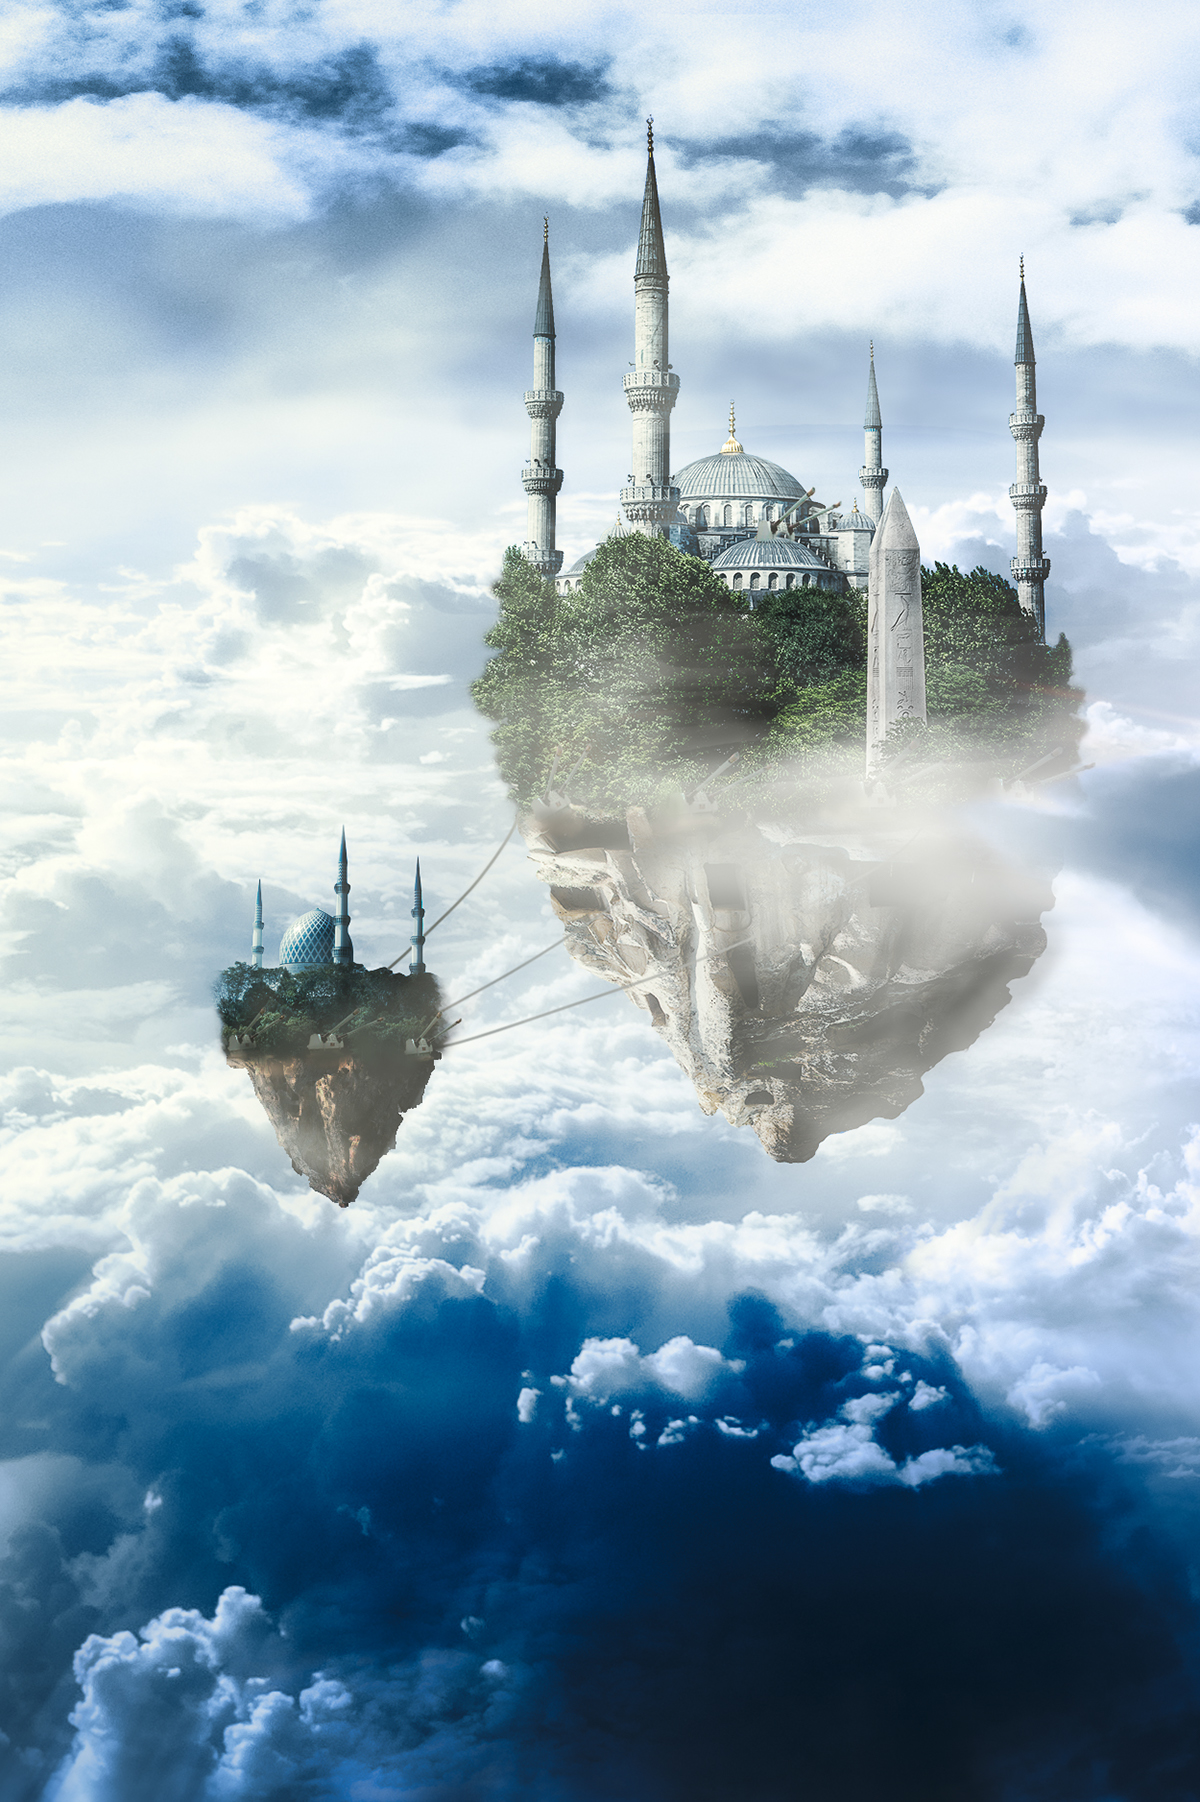 floating wisdom nathan spotts Hagia Sophia blue mosque Turkey cloudscape surreal fantasy sci-fi science fiction Composite photo illustration  Photo Manipulation  concept art